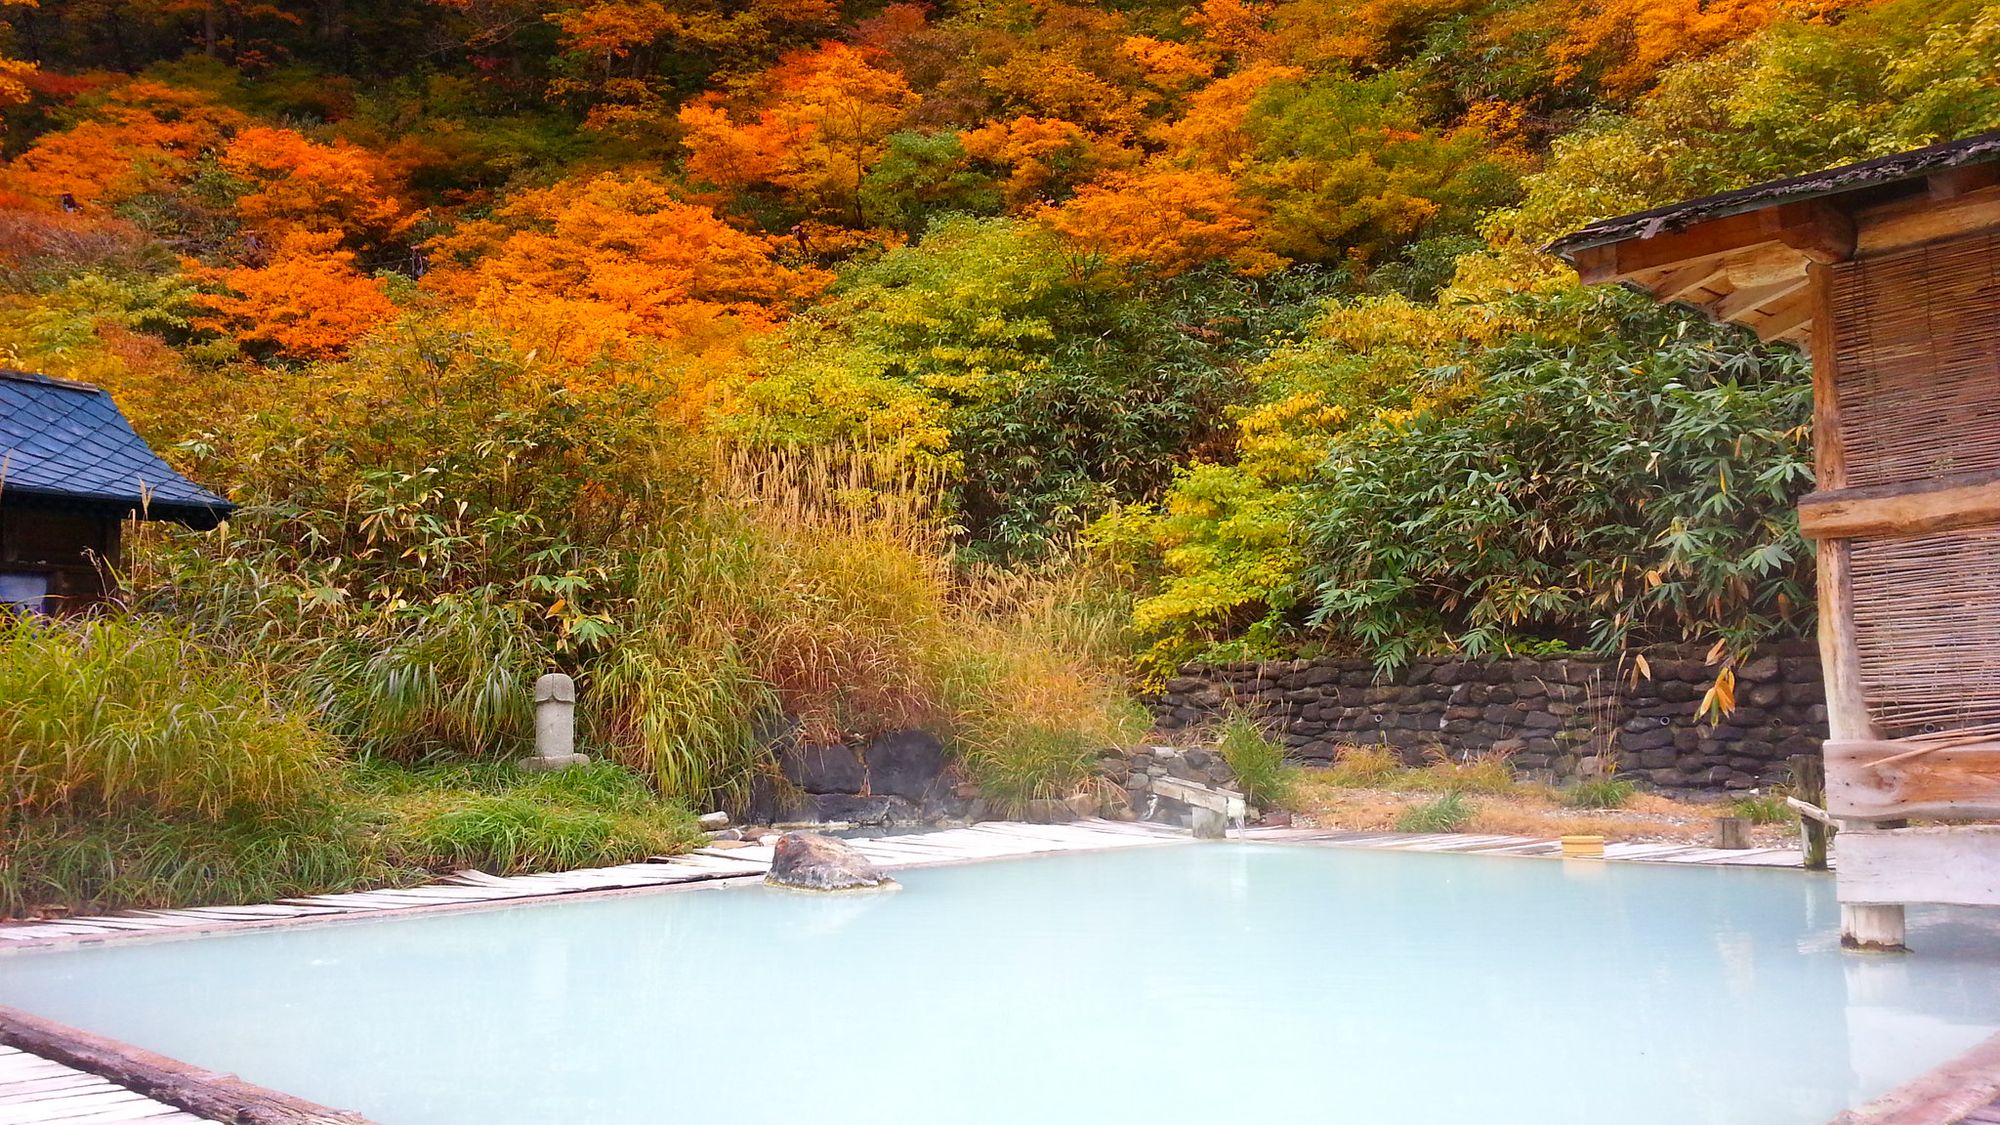 A peek into Japan’s Hot Springs